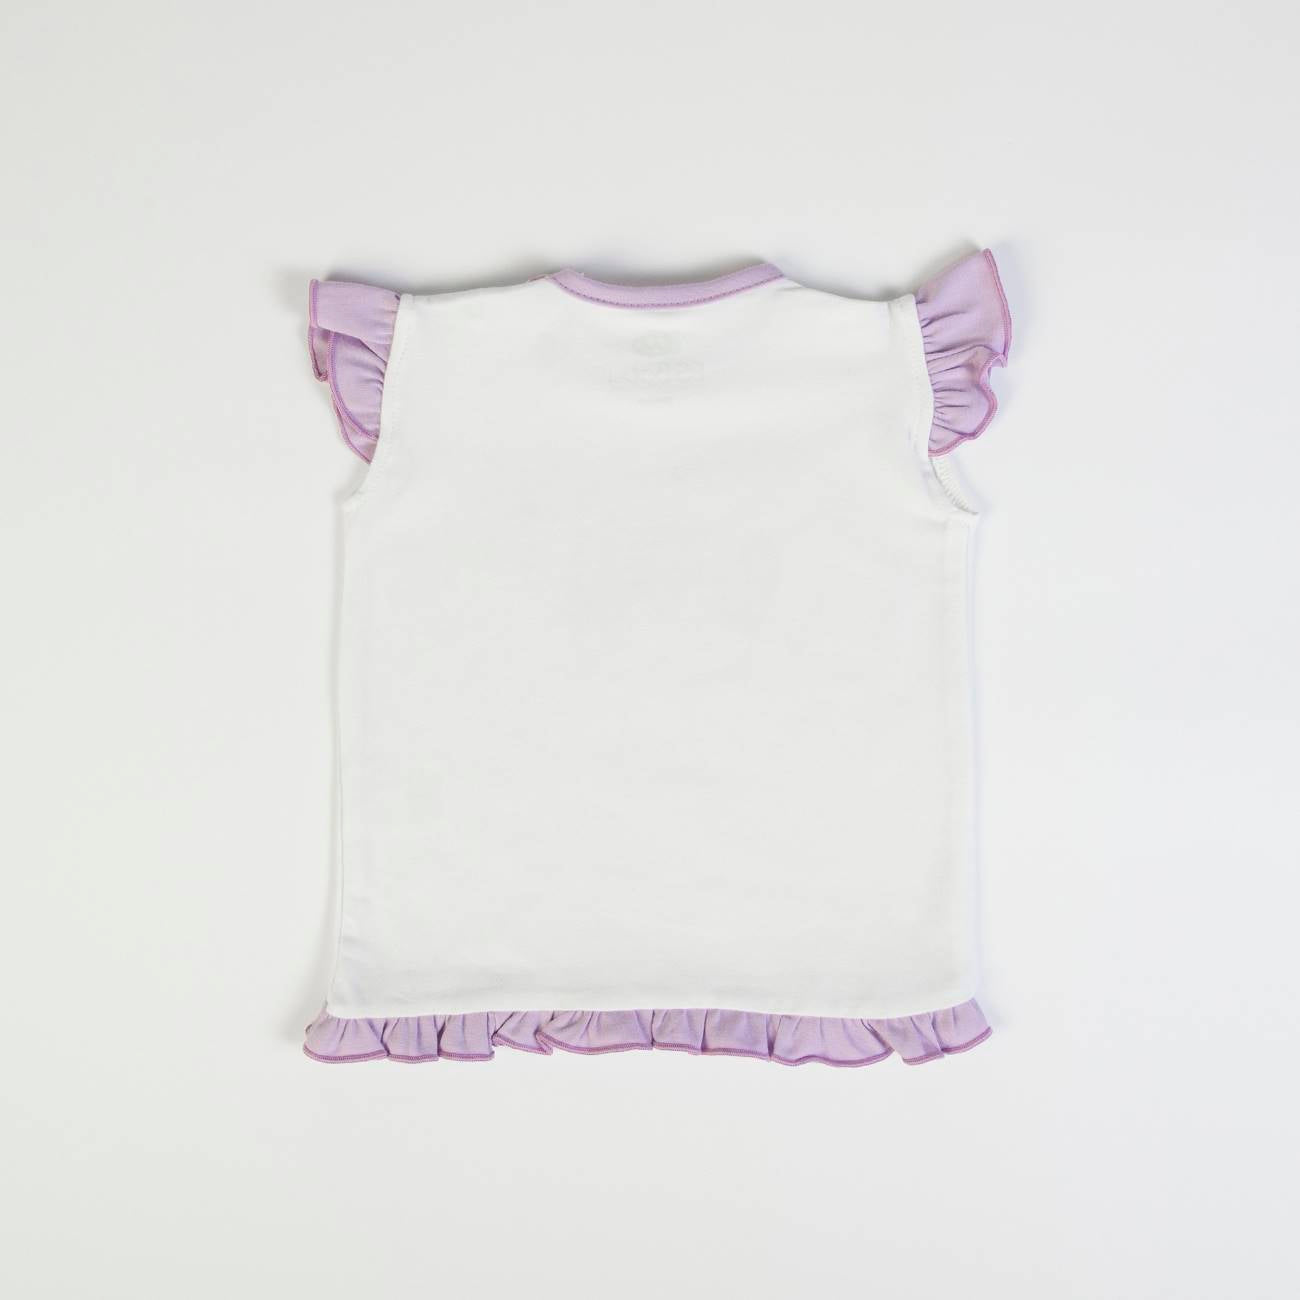 Lilac Top and leggings